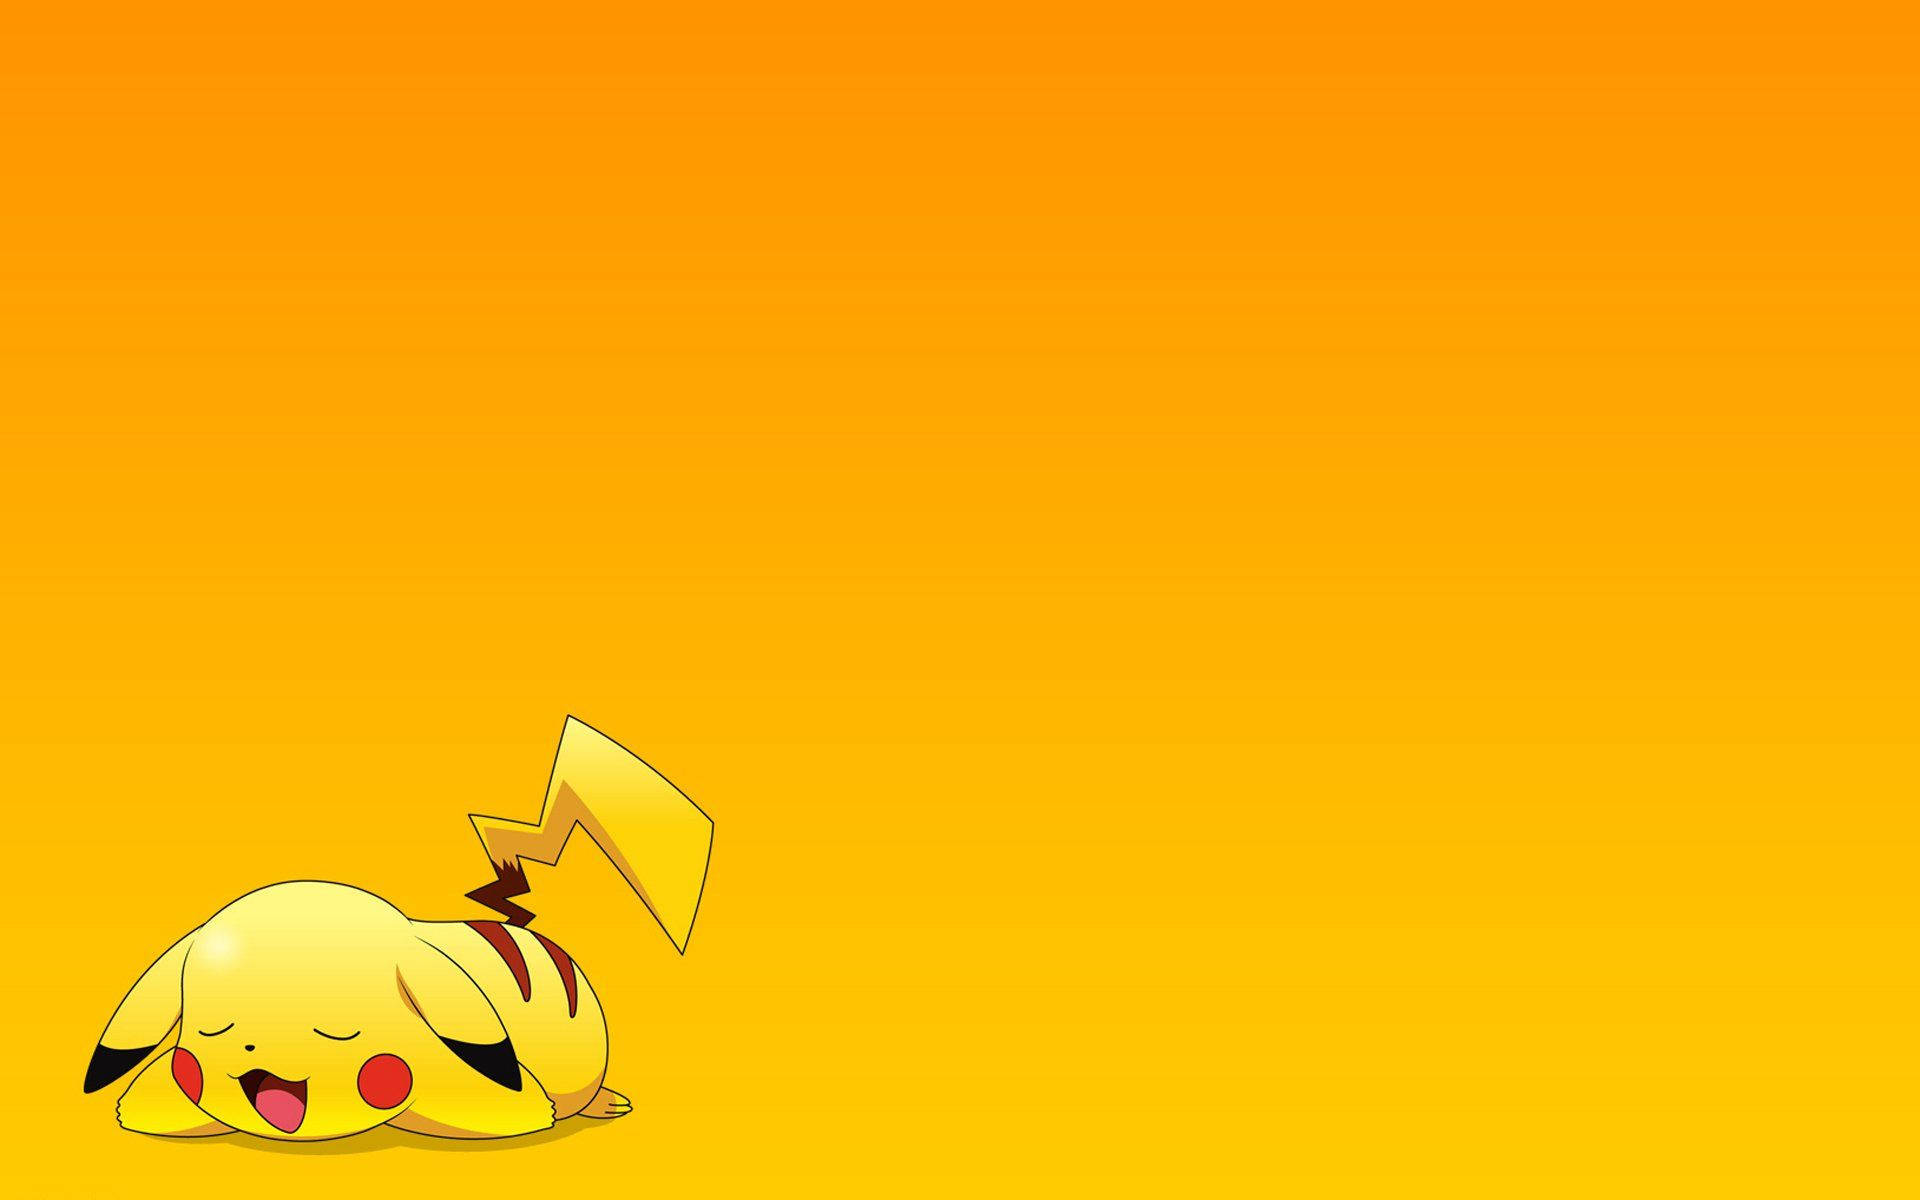 Pikachu 3d Soundly Resting Pokémon Wallpaper